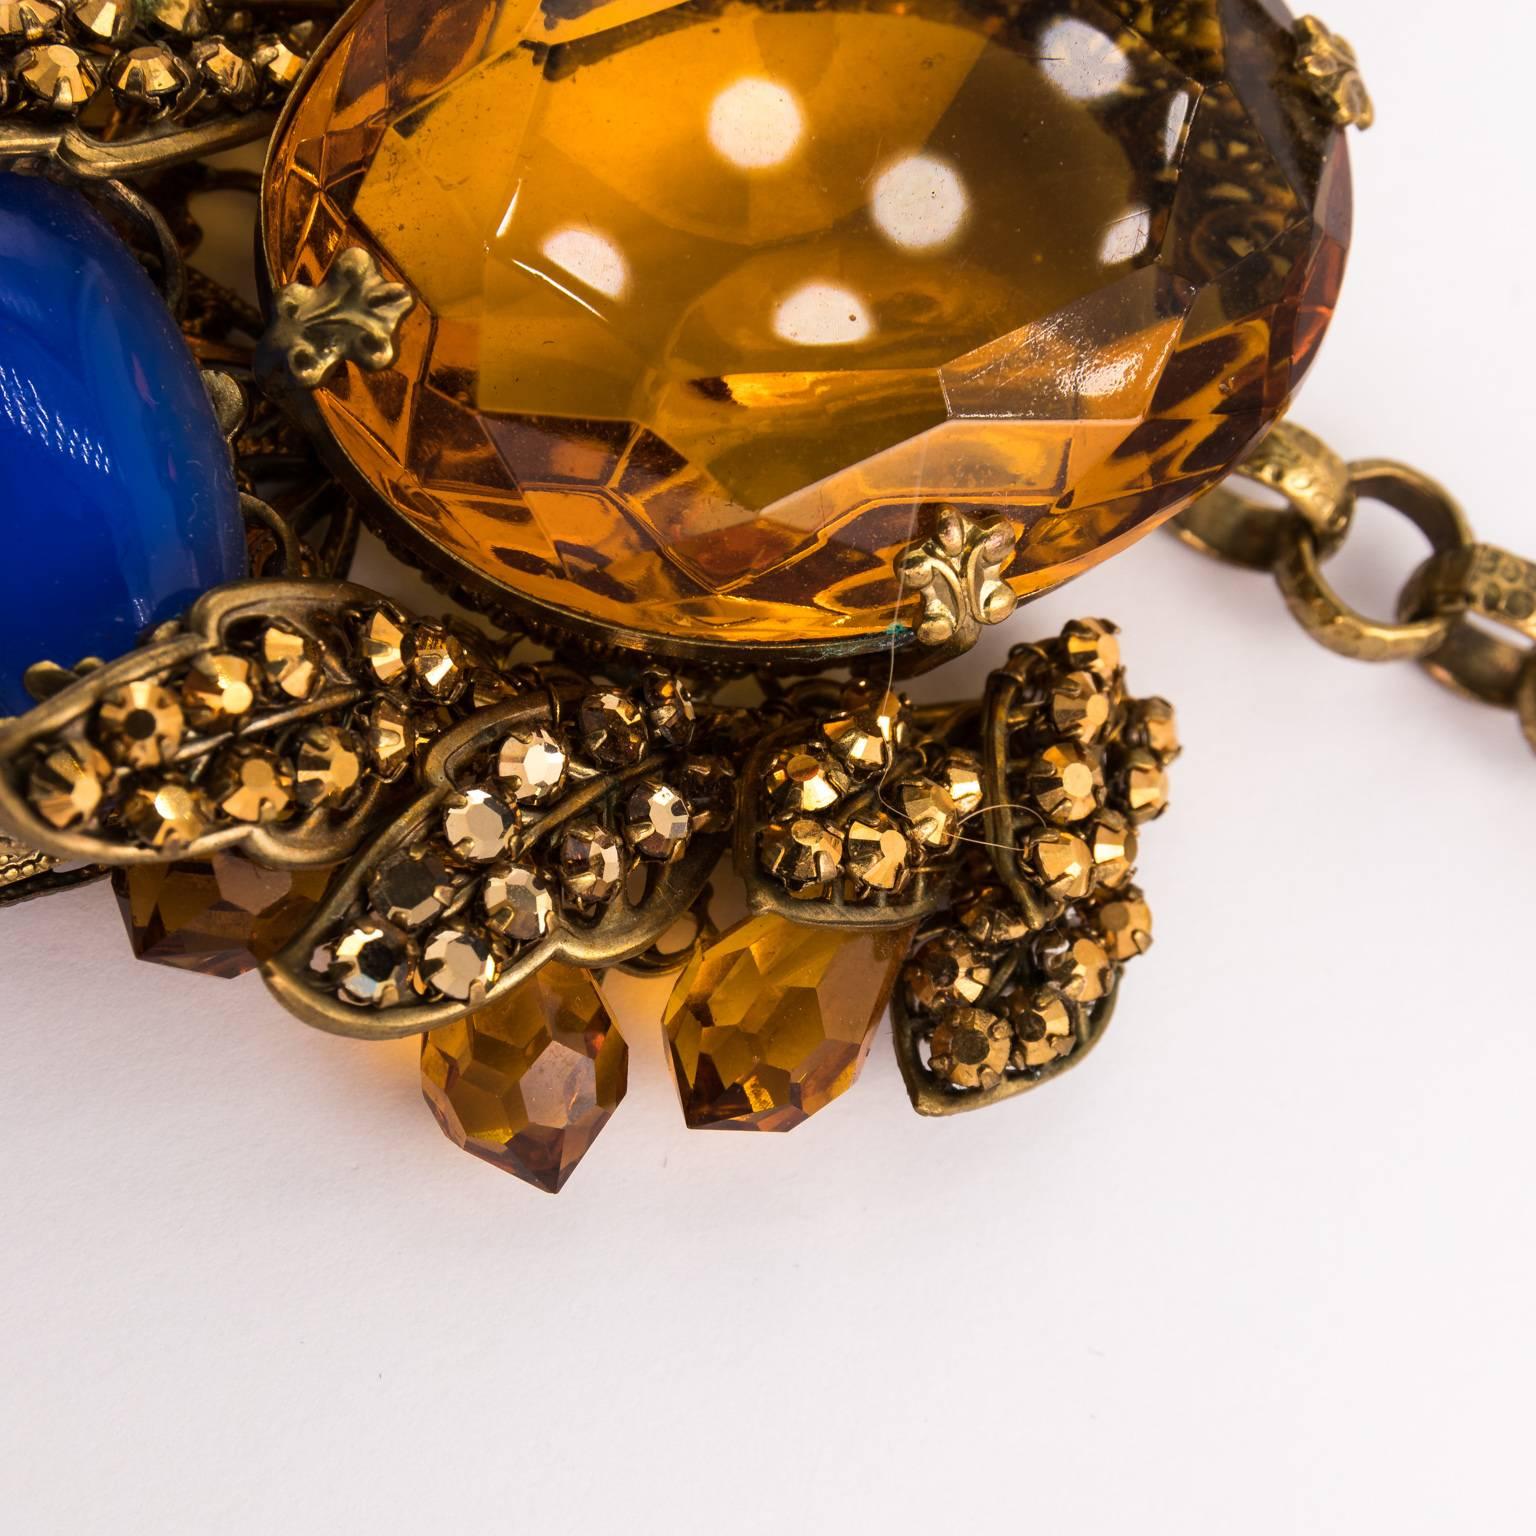 Bijoux Heart Necklace with Large Citrine Glass Centre Piece by Dita Von Teese 9